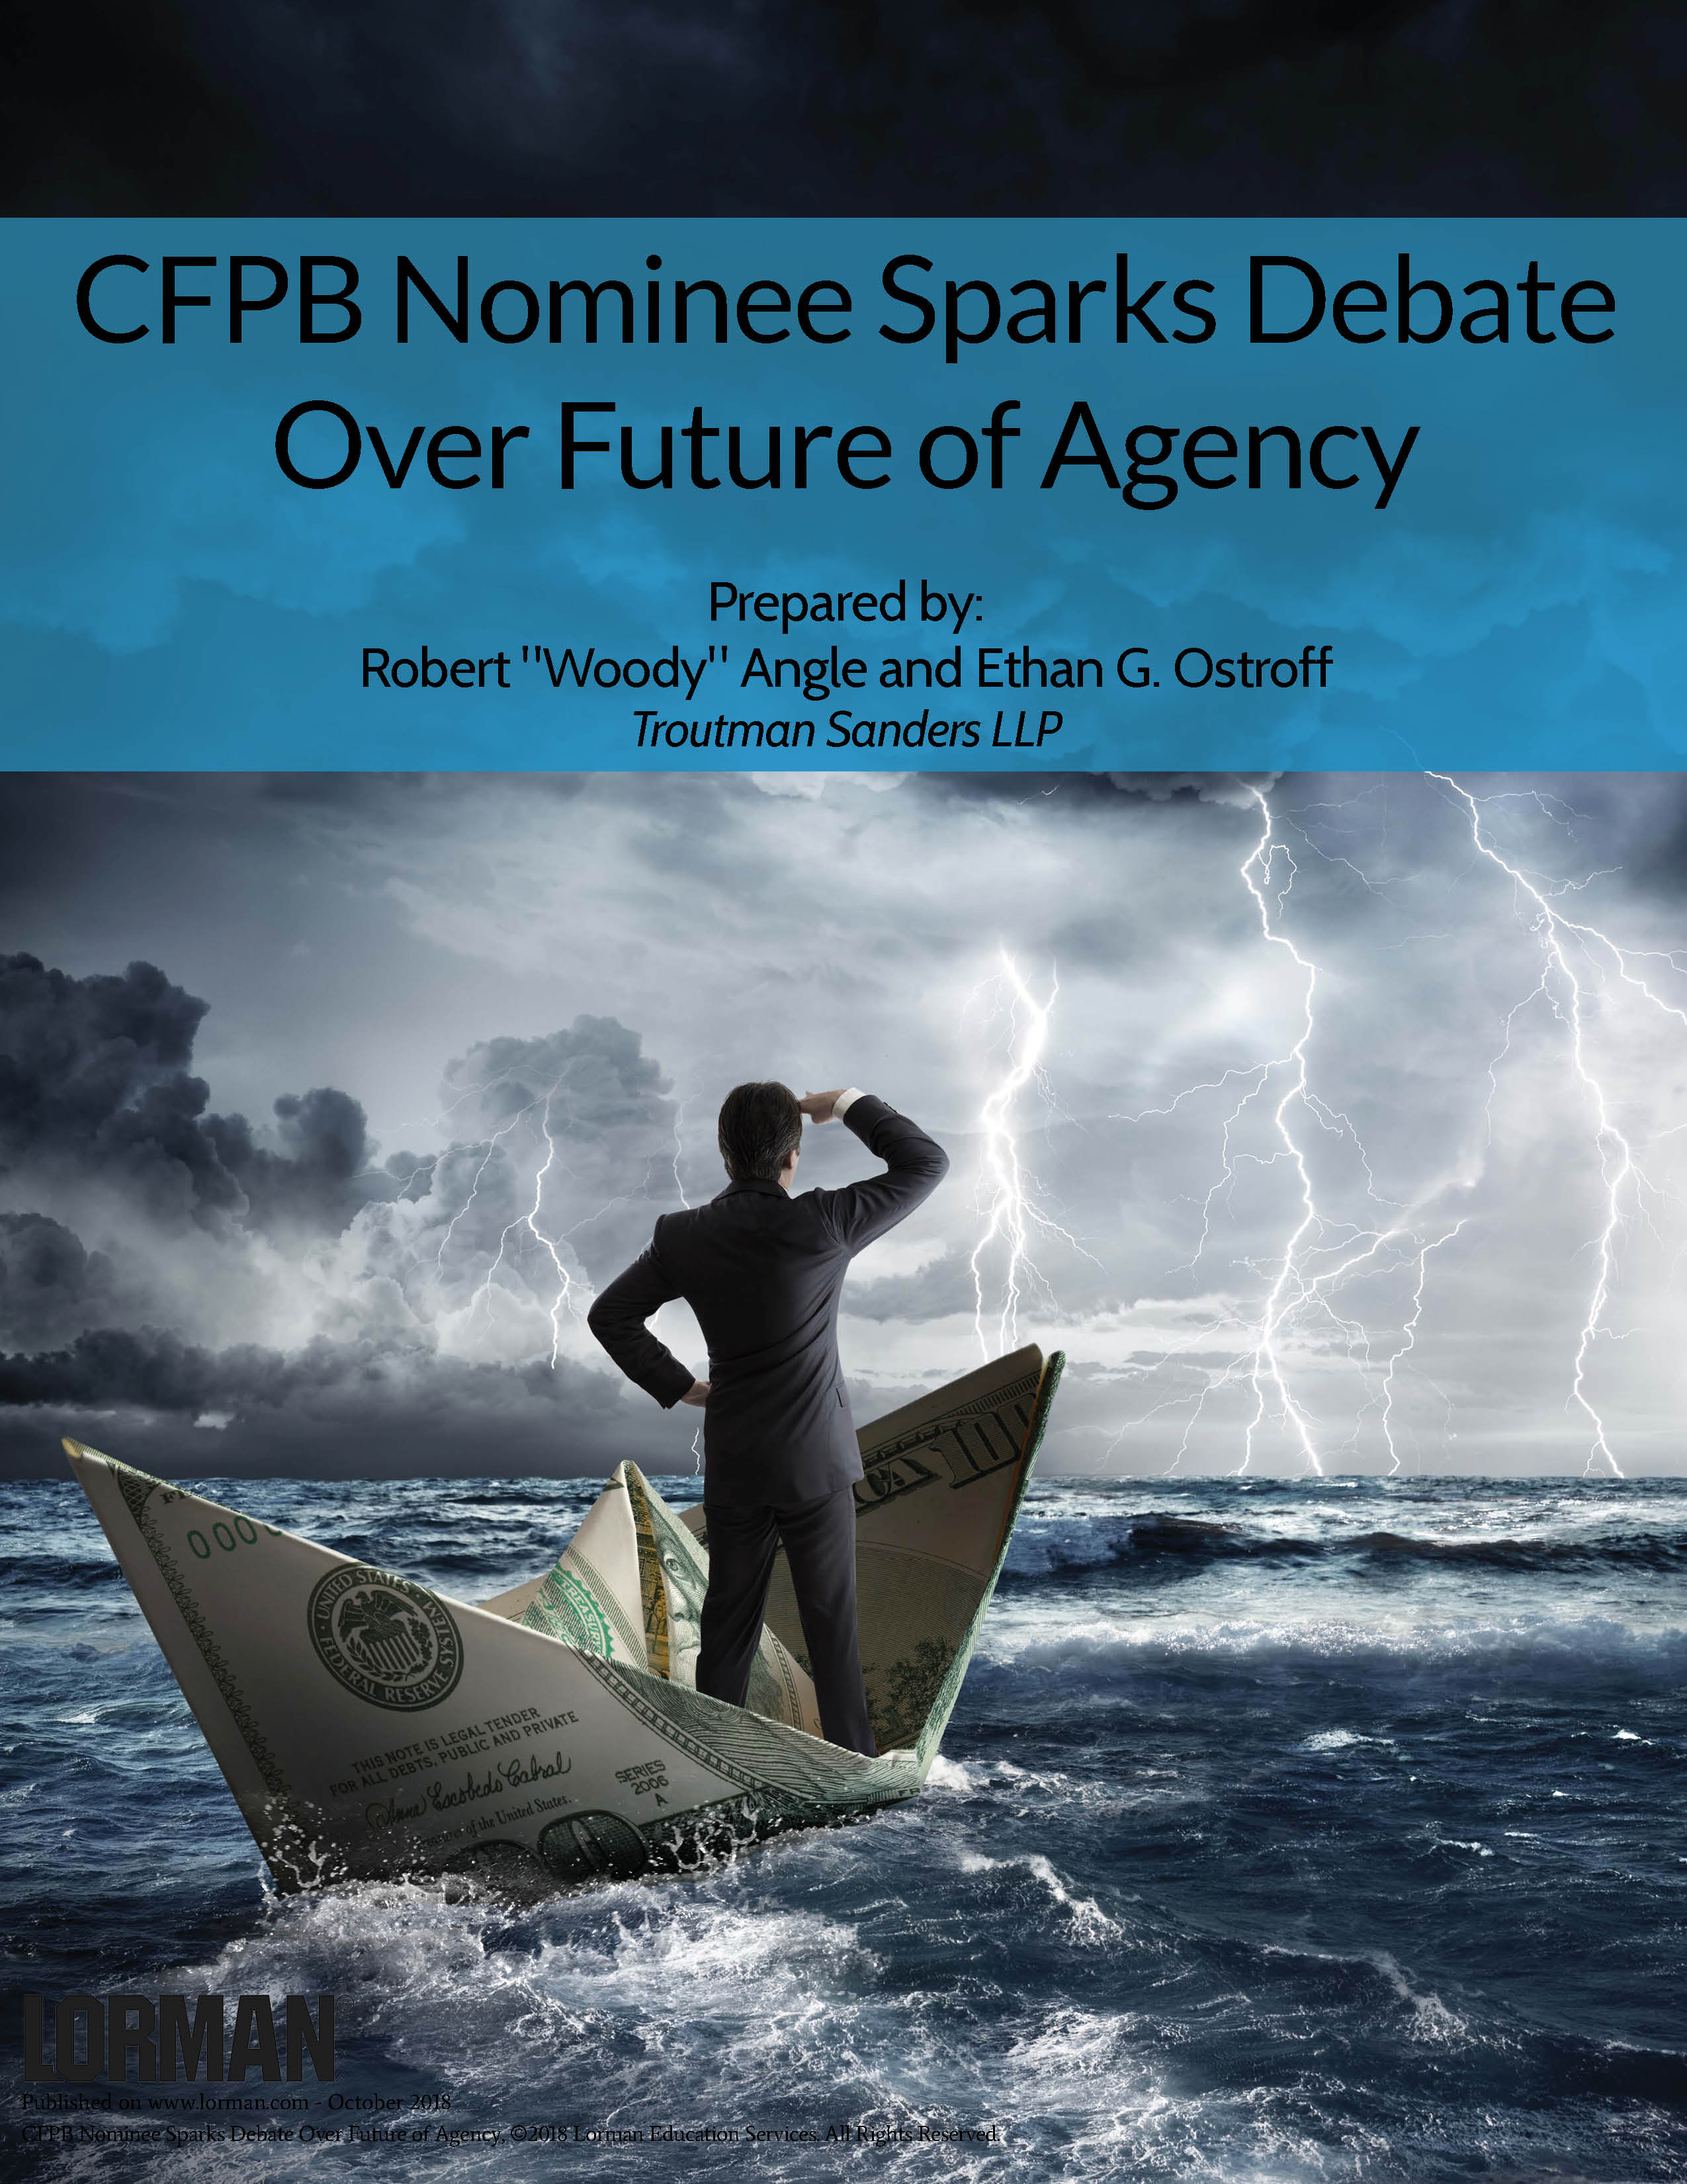 CFPB Nominee Sparks Debate Over Future of Agency